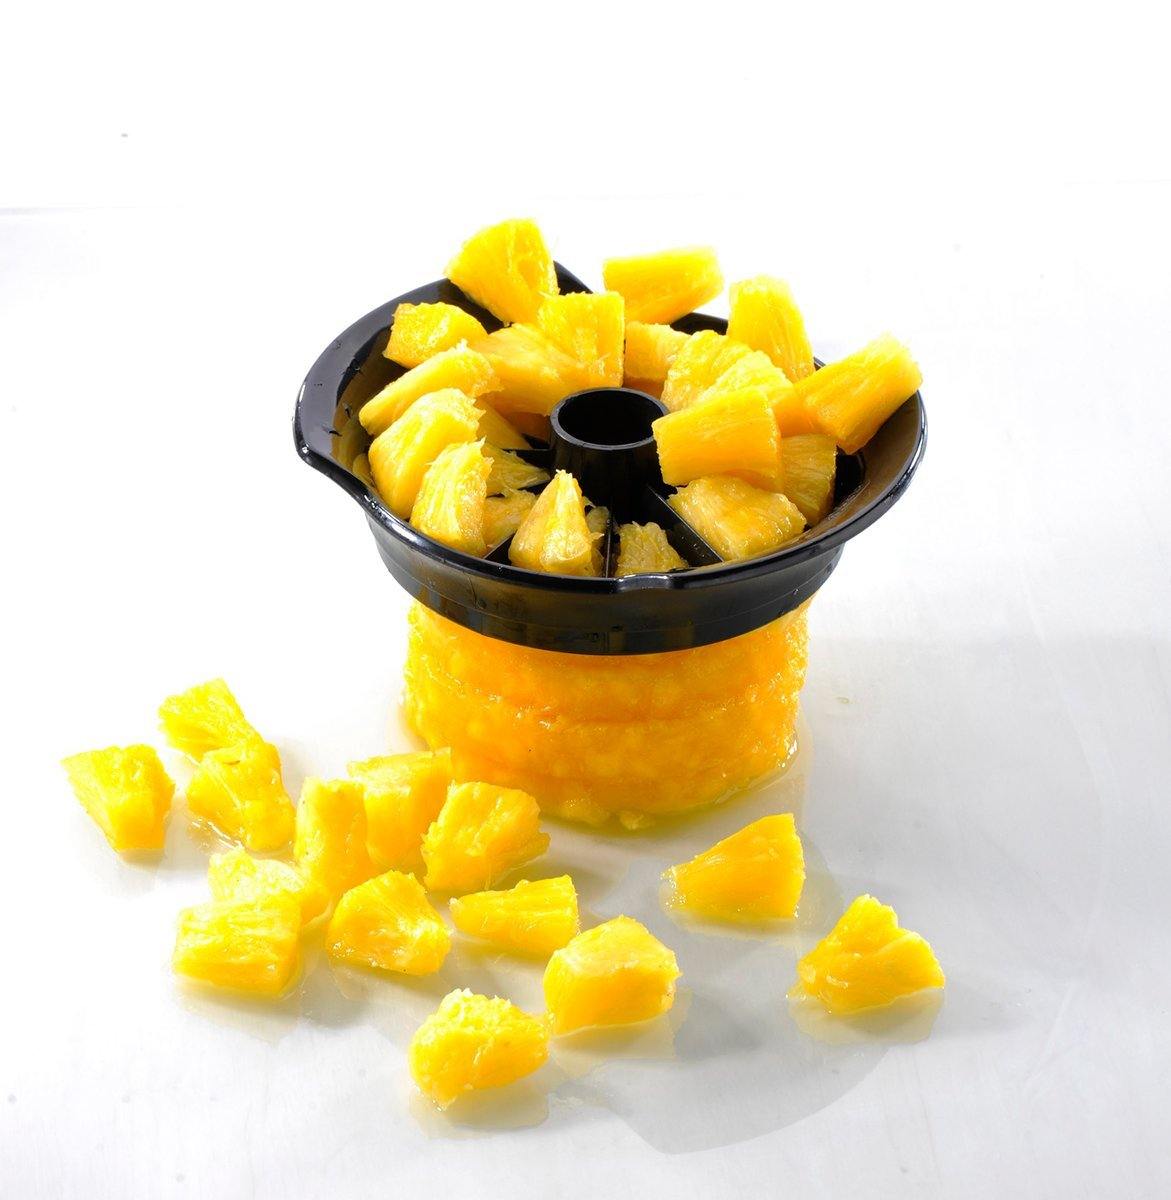 GEFU Pineapple Slicer Professional Plus - Whole and All